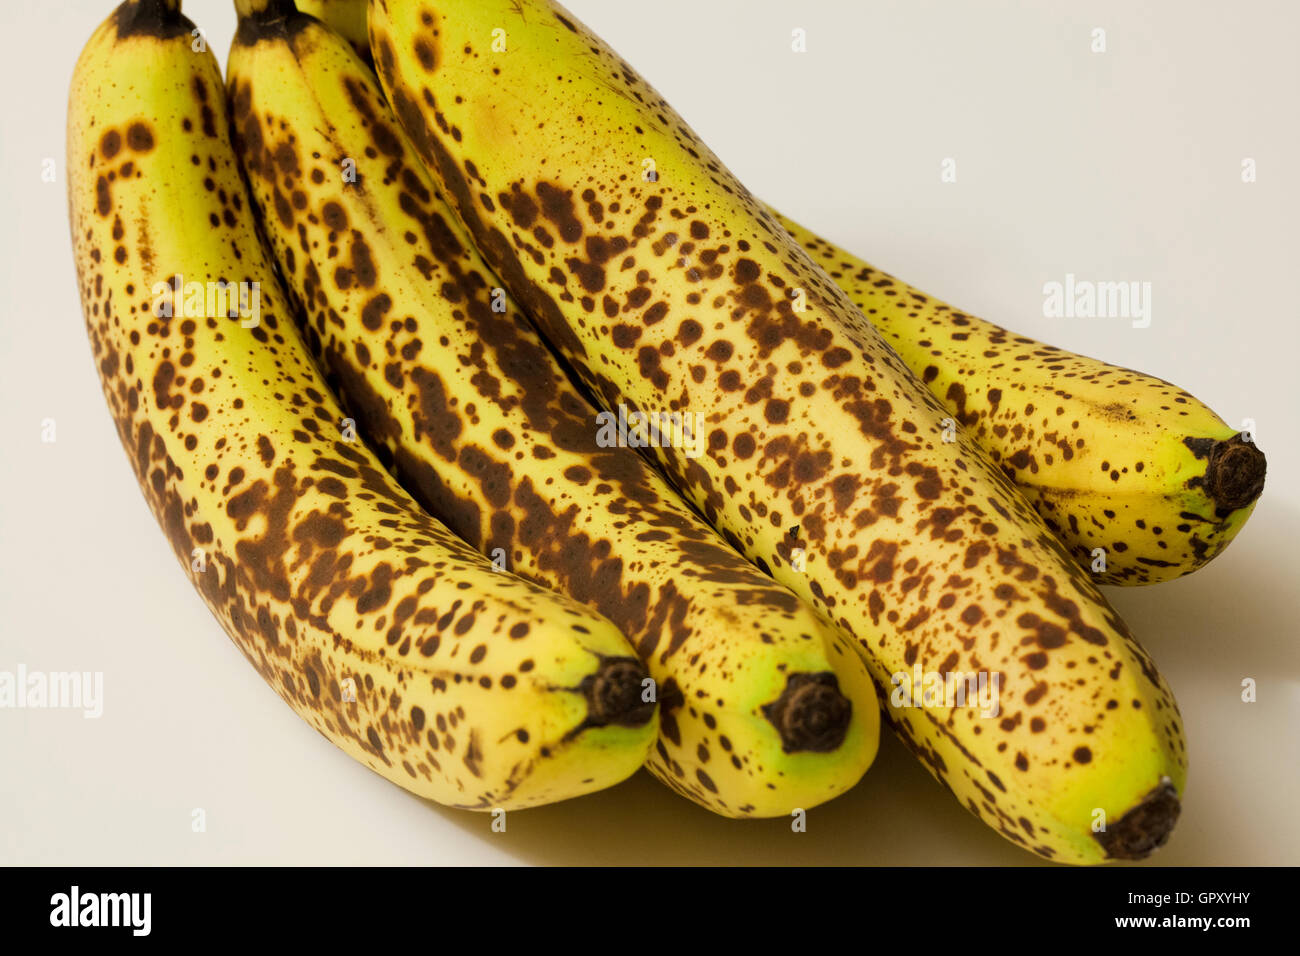 Banane stramature (macchie marroni) Foto Stock